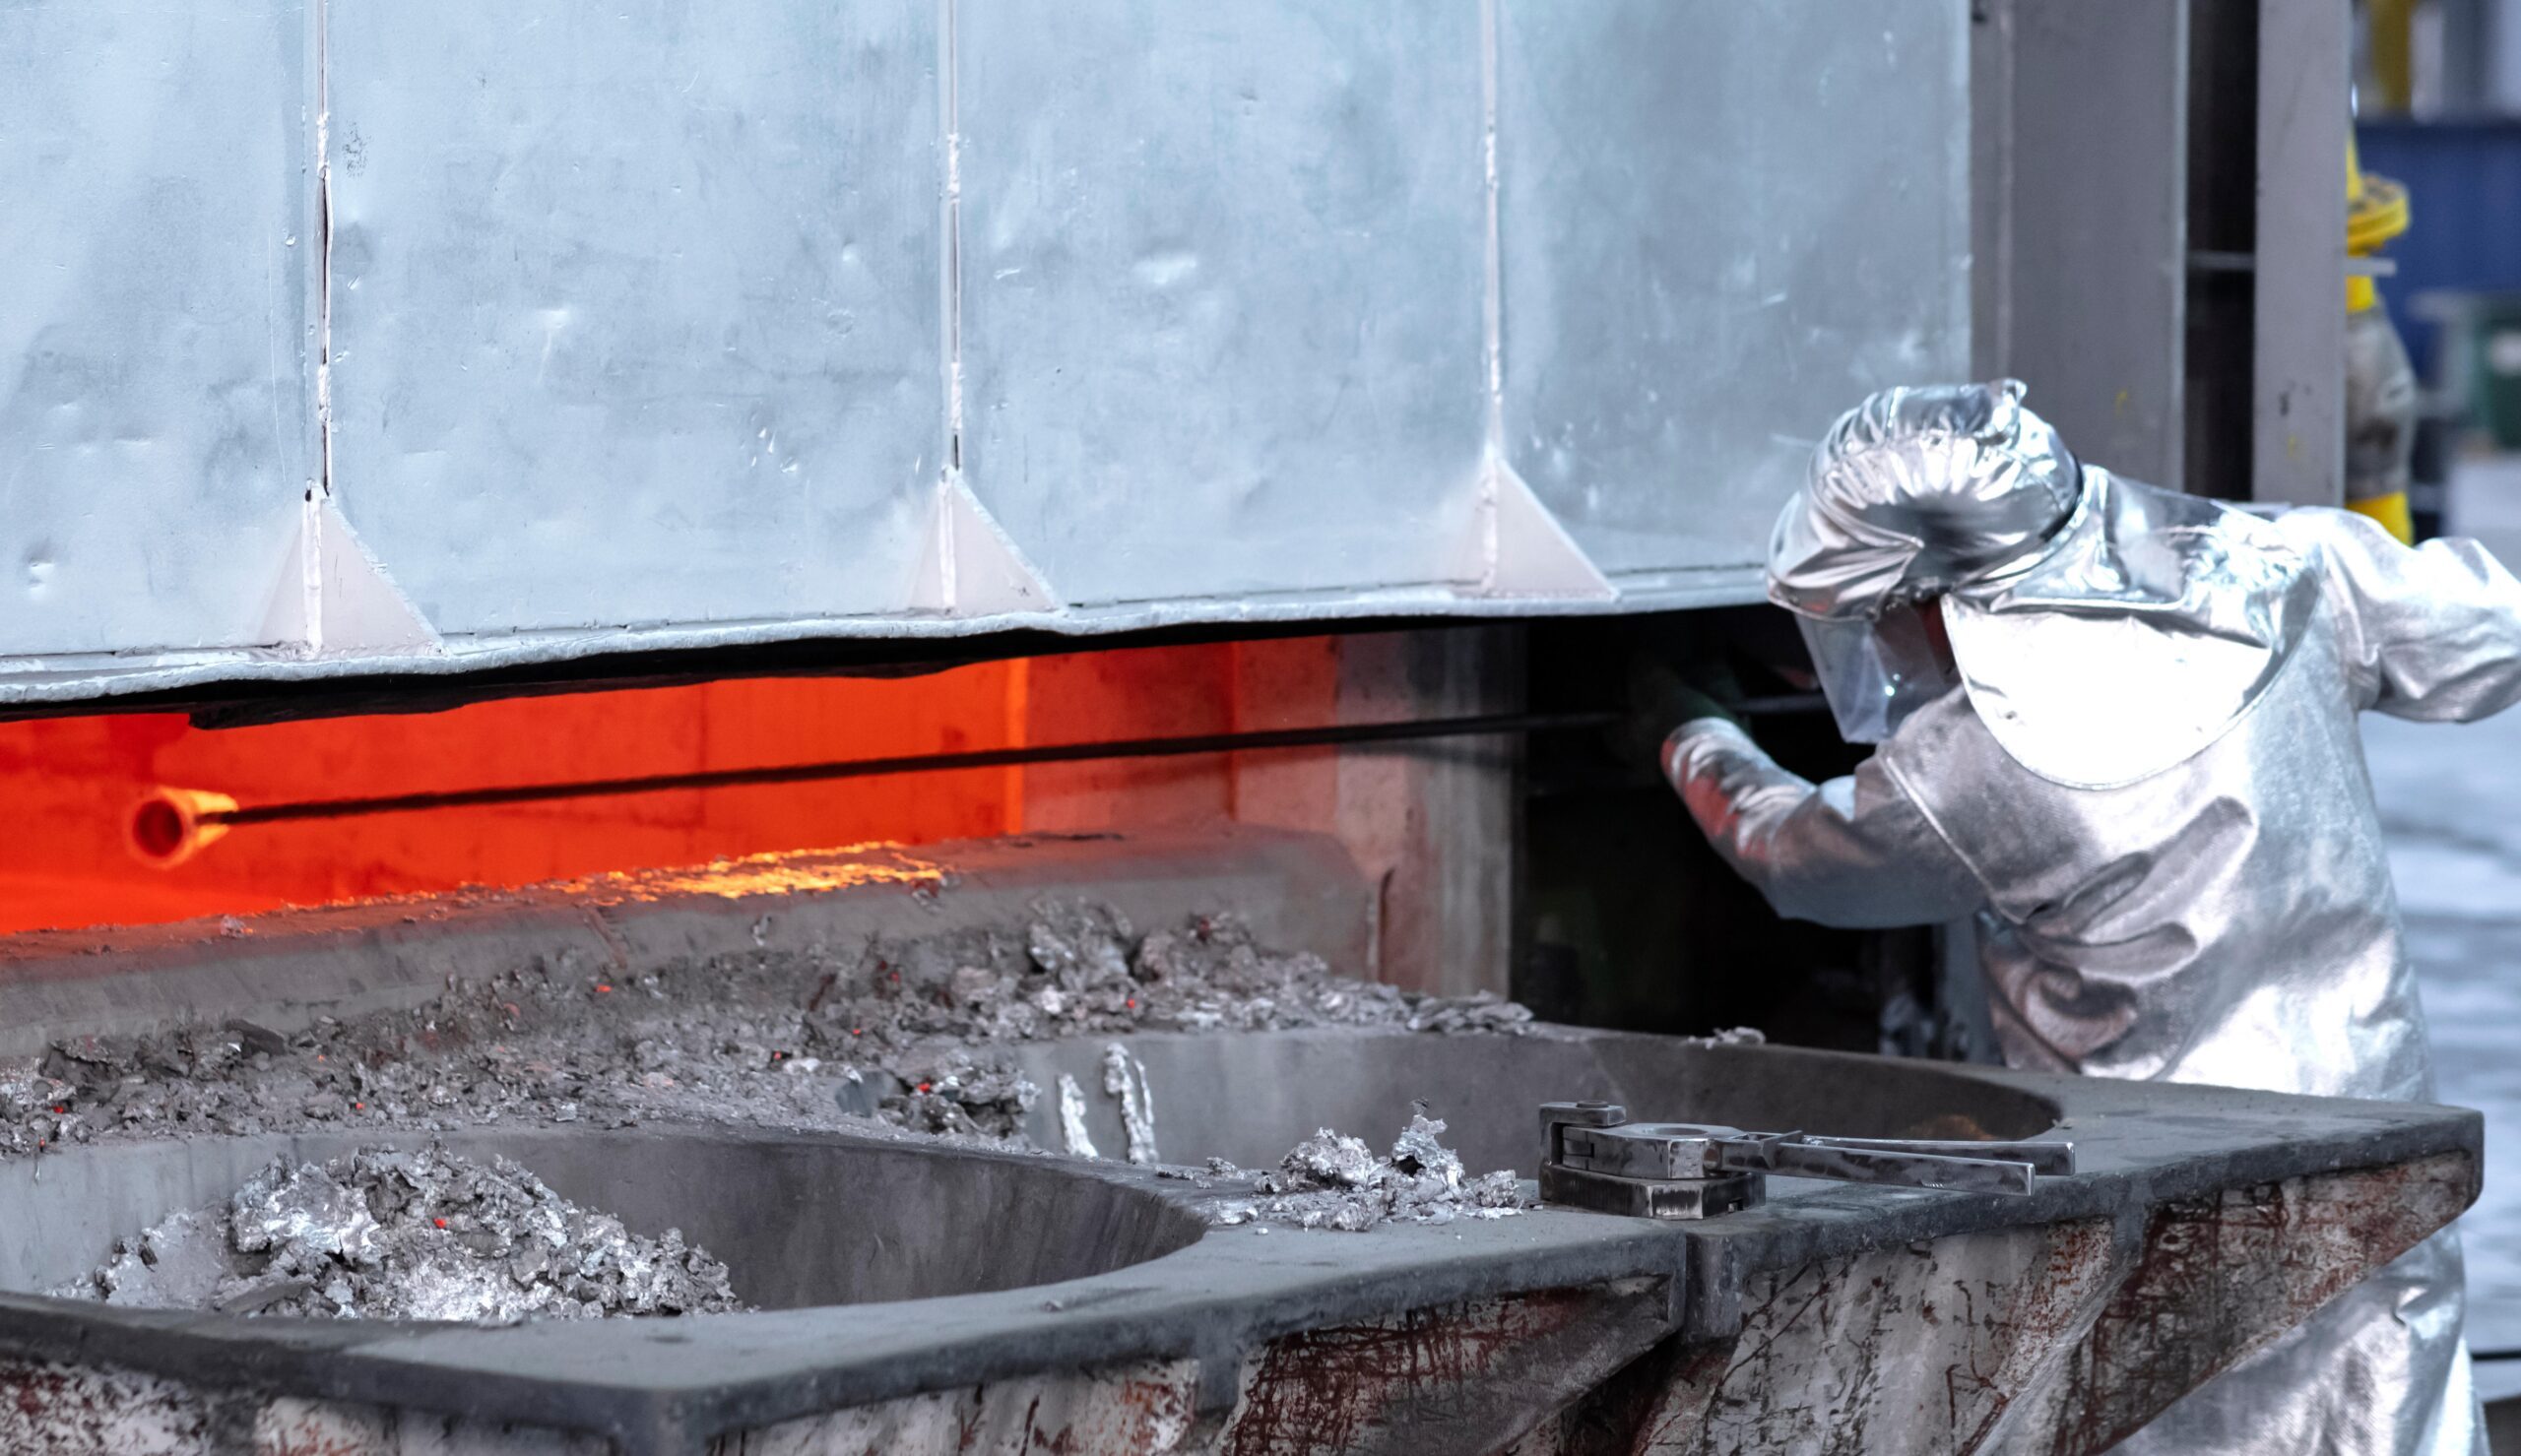 Saudi aluminium producer Talco is offering 12 million shares